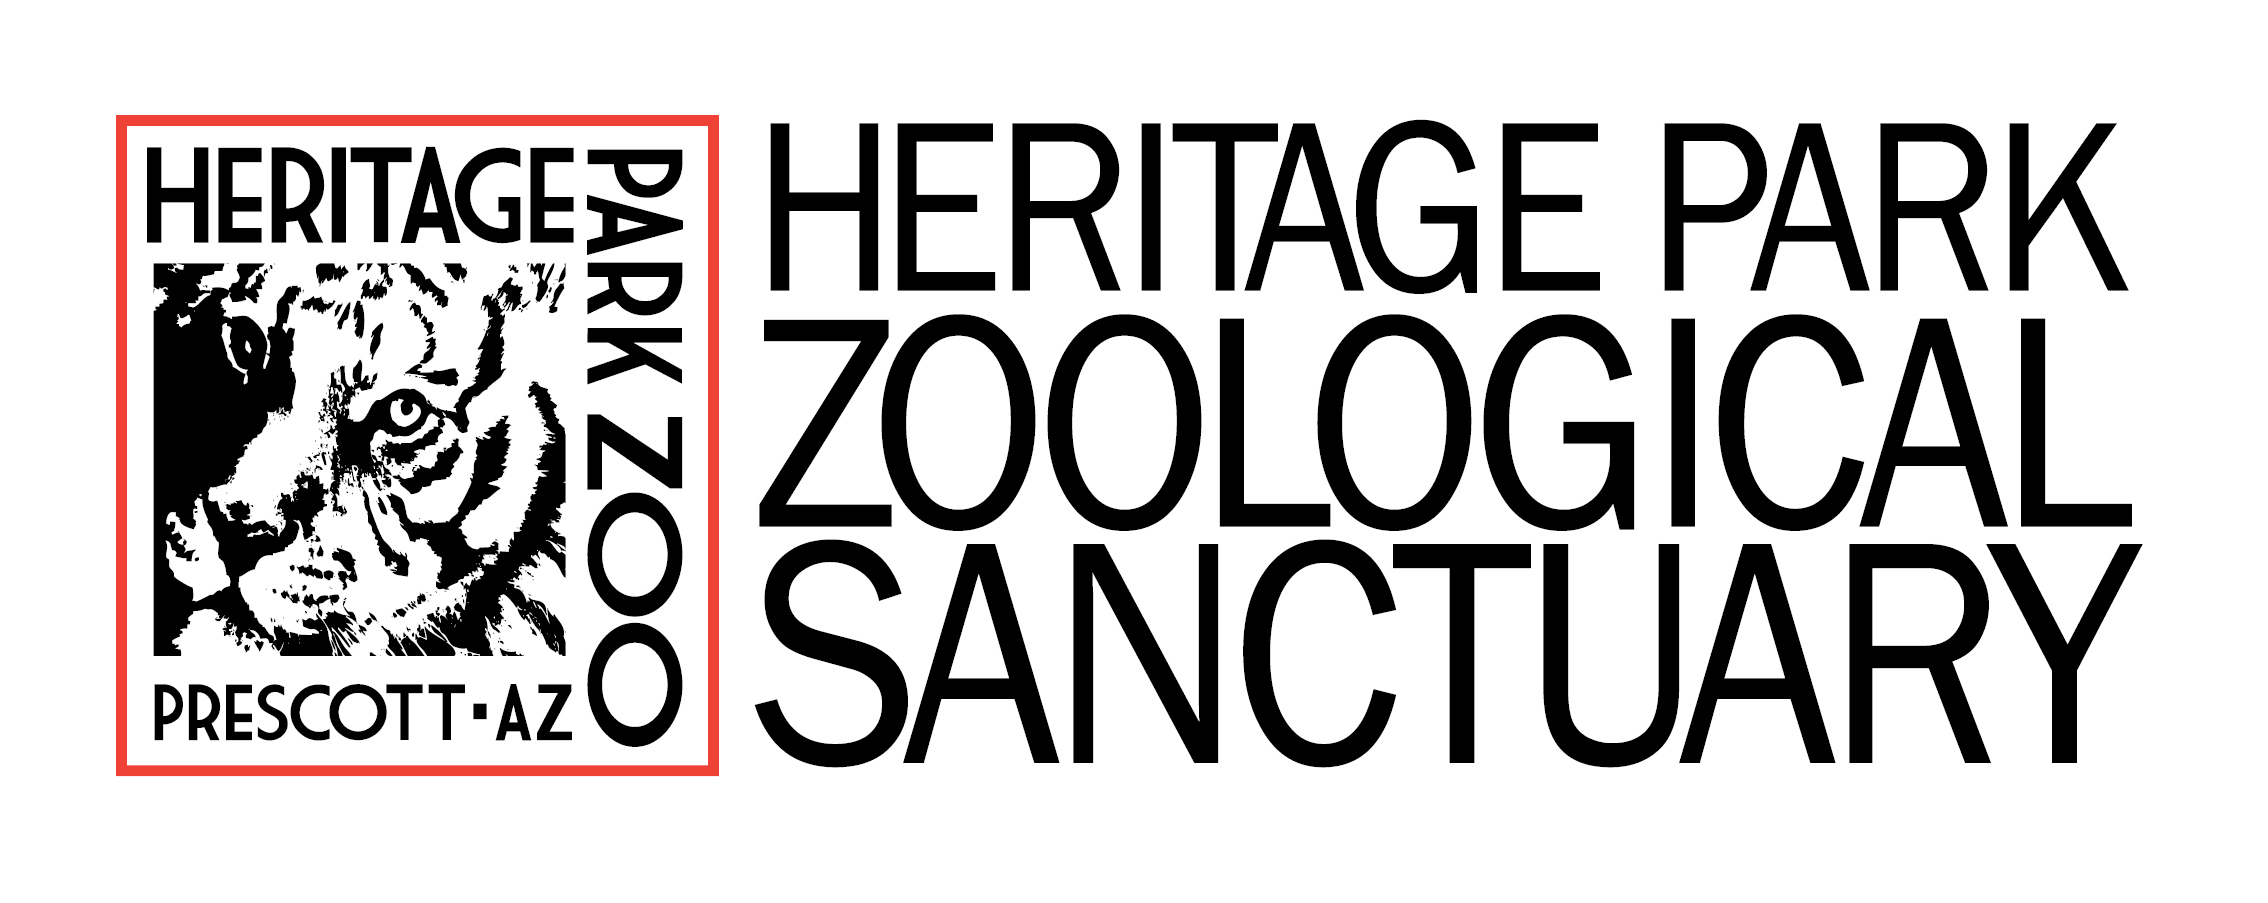 Heritage Park Zoological Sanctuary, Prescott Logo